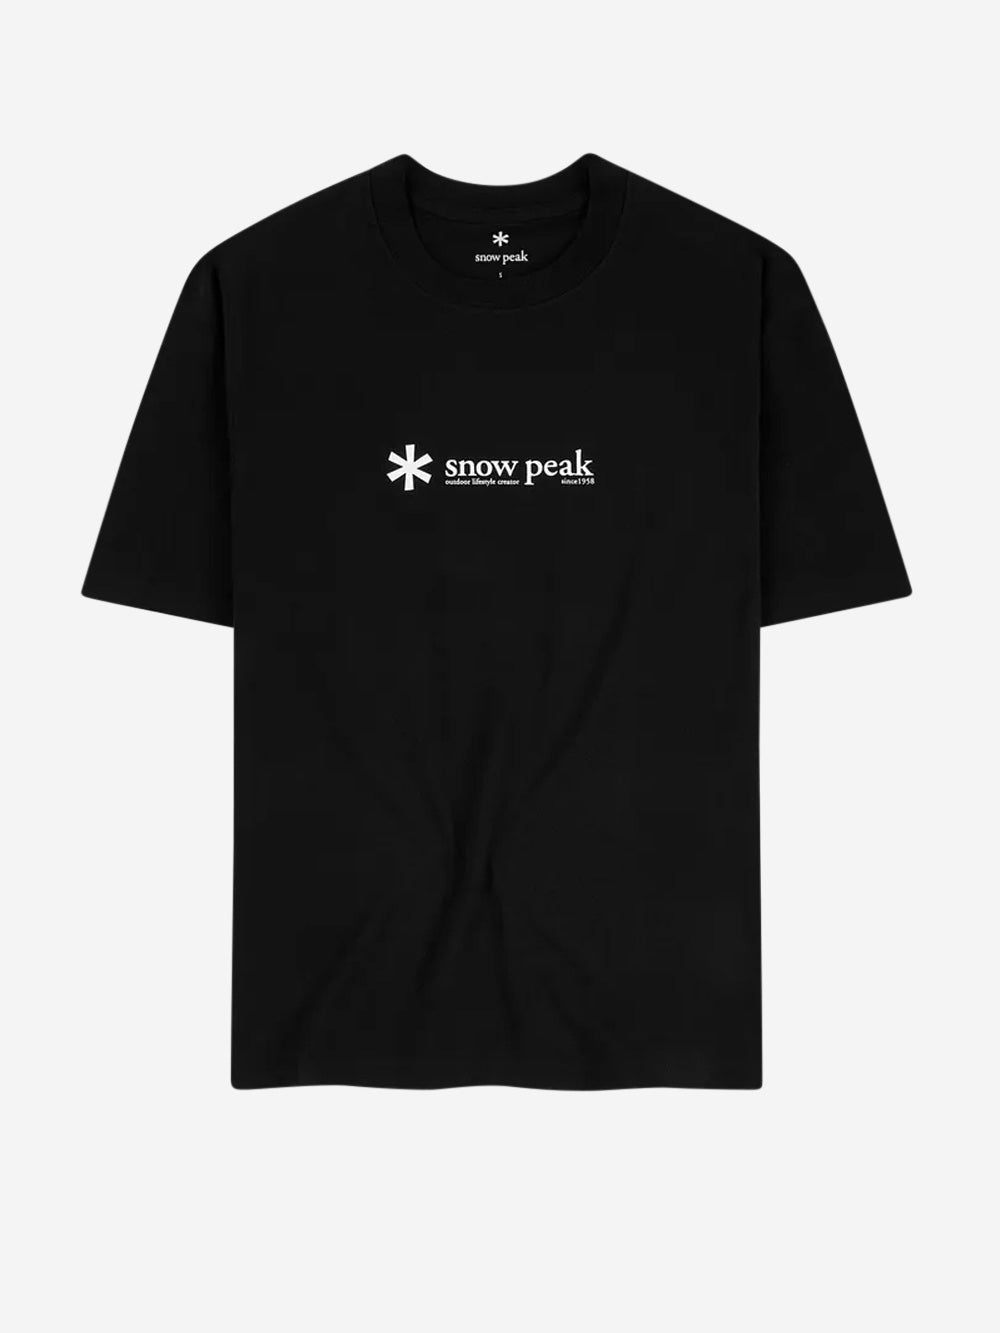 SNOW PEAK T-shirt logo Nero Urbanstaroma